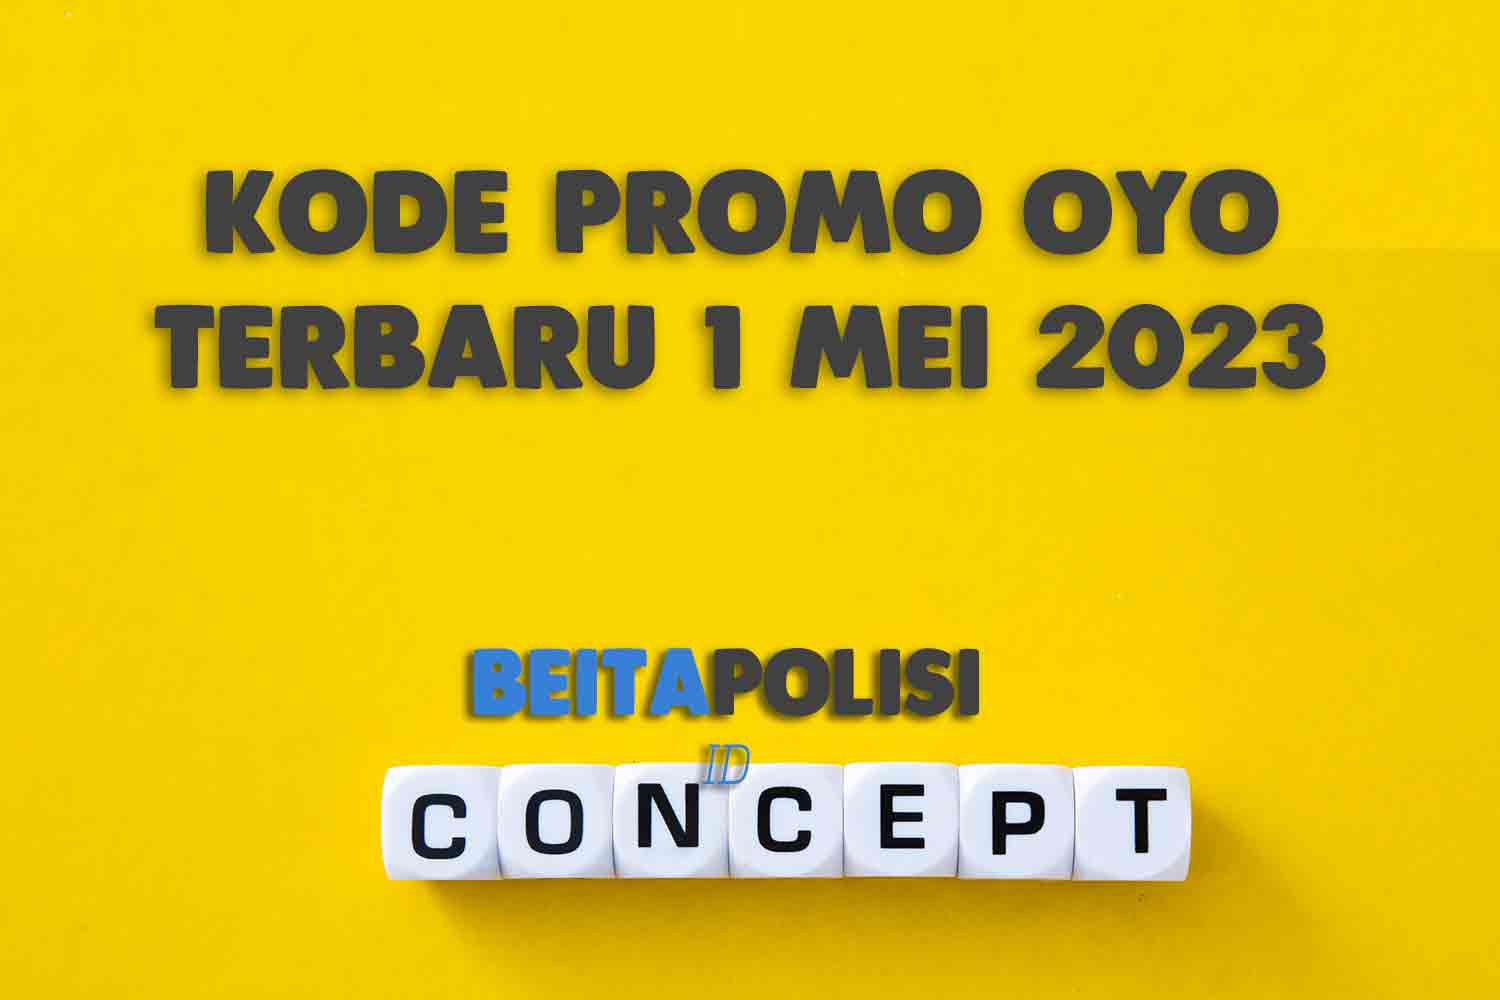 Kode Promo Oyo Terbaru 1 Mei 2023